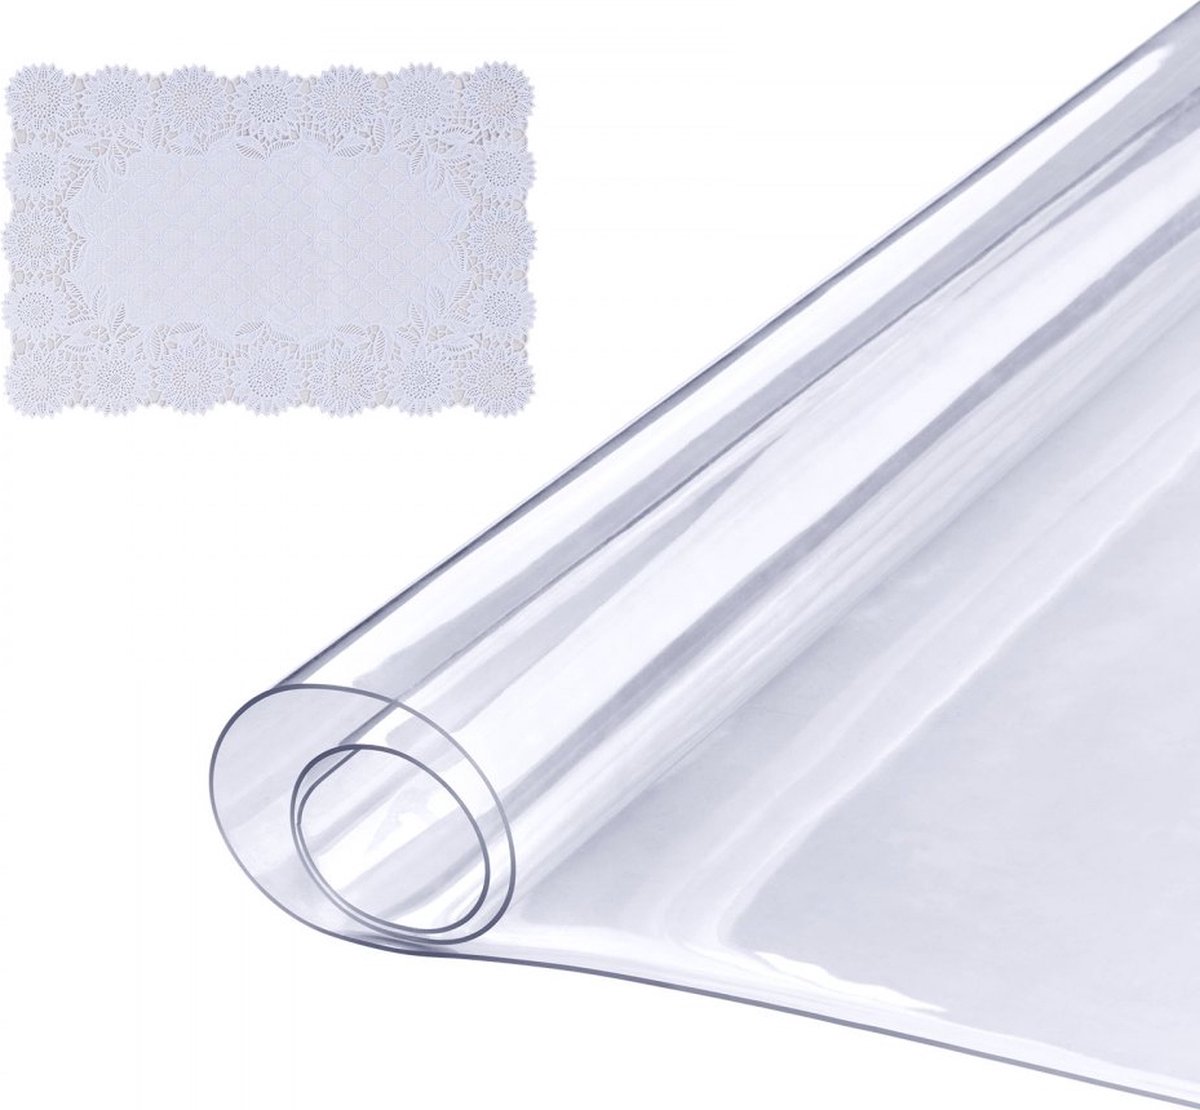 tafelfolie tafelbescherming transparant 1,5 mm dikte, tafelbeschermingsfolie PVC 460 x 1232 mm rechthoekig tafelkleed tafelfolie wasbaar slijtvast hittebestendig watervast tafelbeschermingsfolie